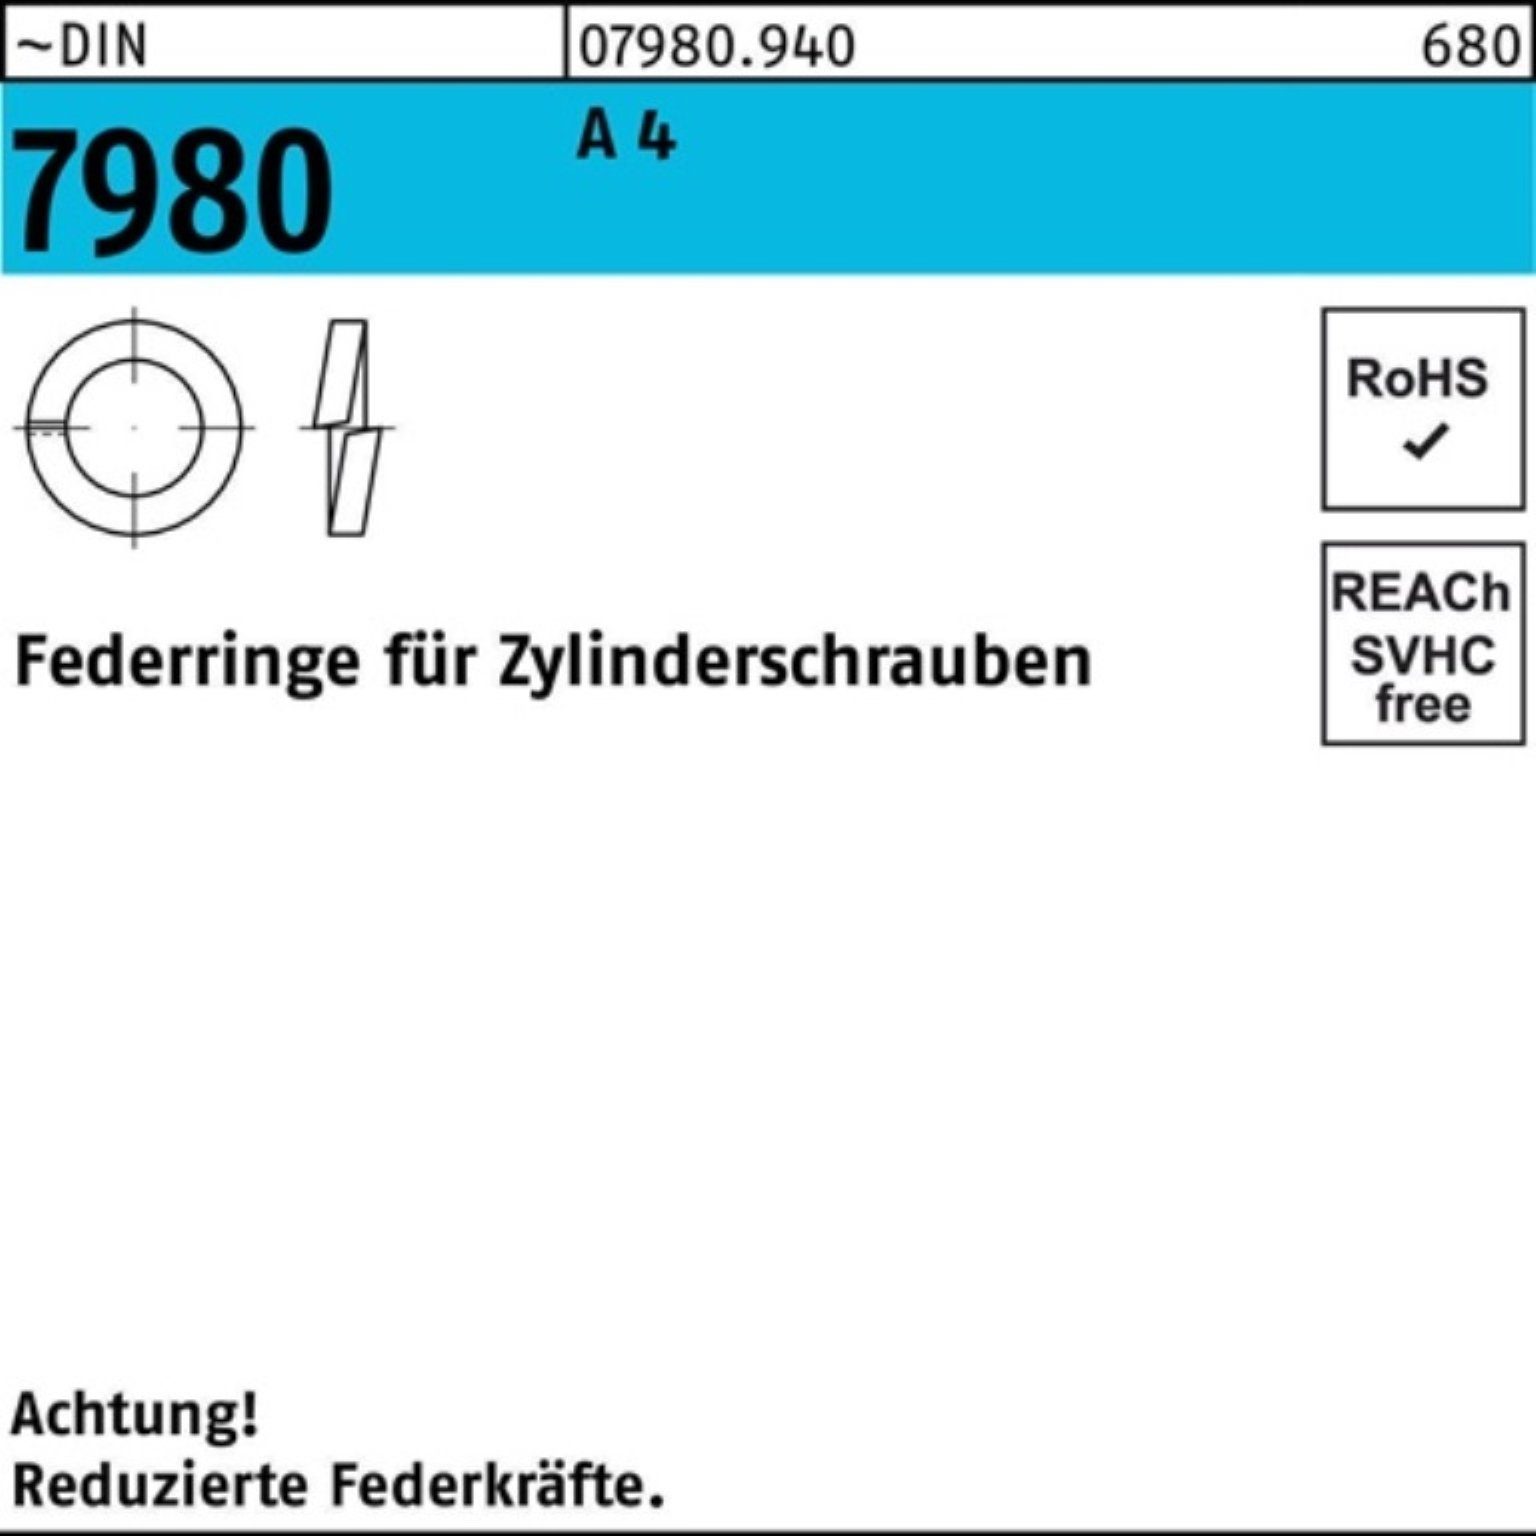 Pack Stück Zylinderschraube A DIN 100 f.Zylinderschrauben Federring 100er ~D 4 7980 Reyher 16